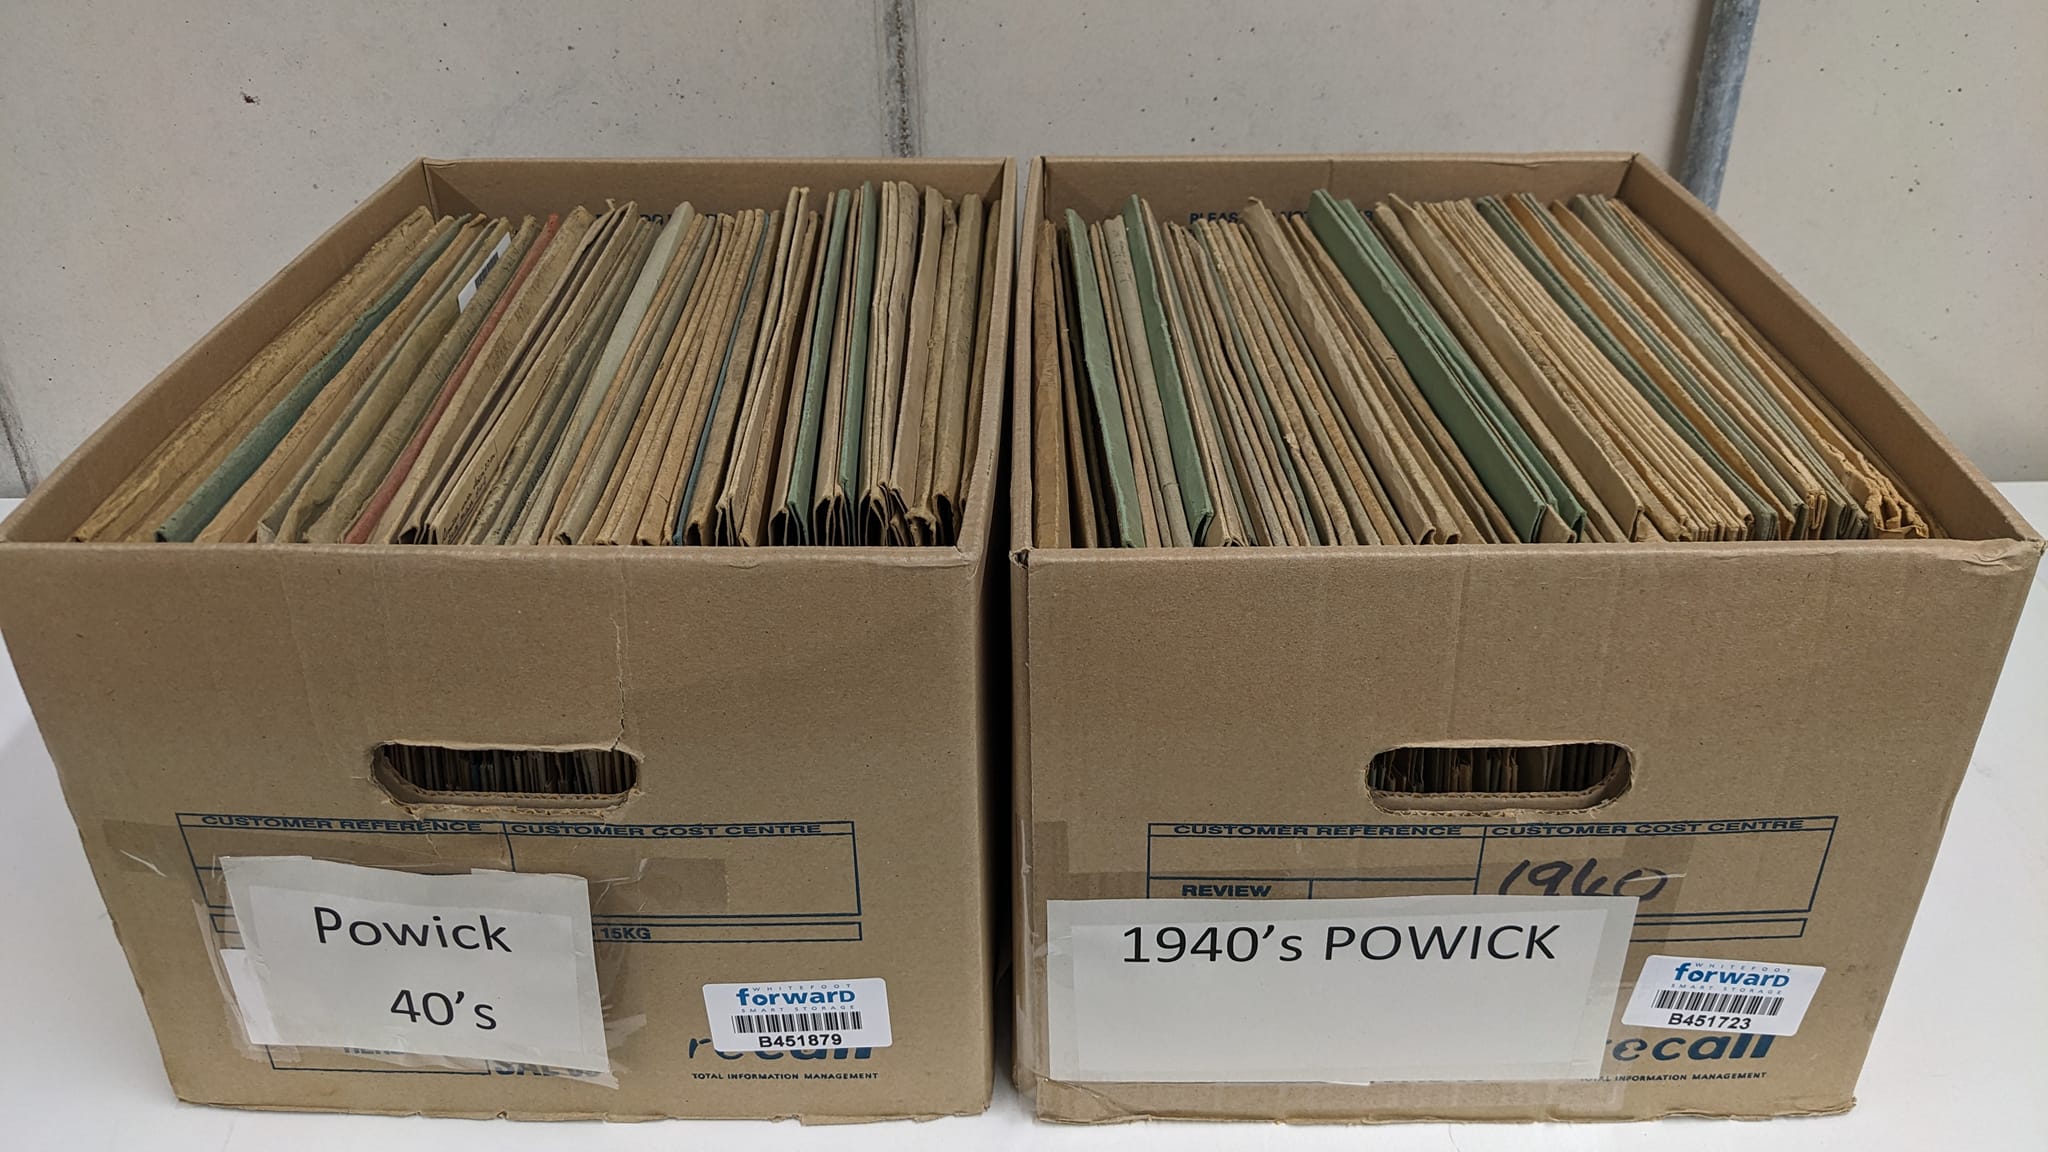 Two boxes of Powick files